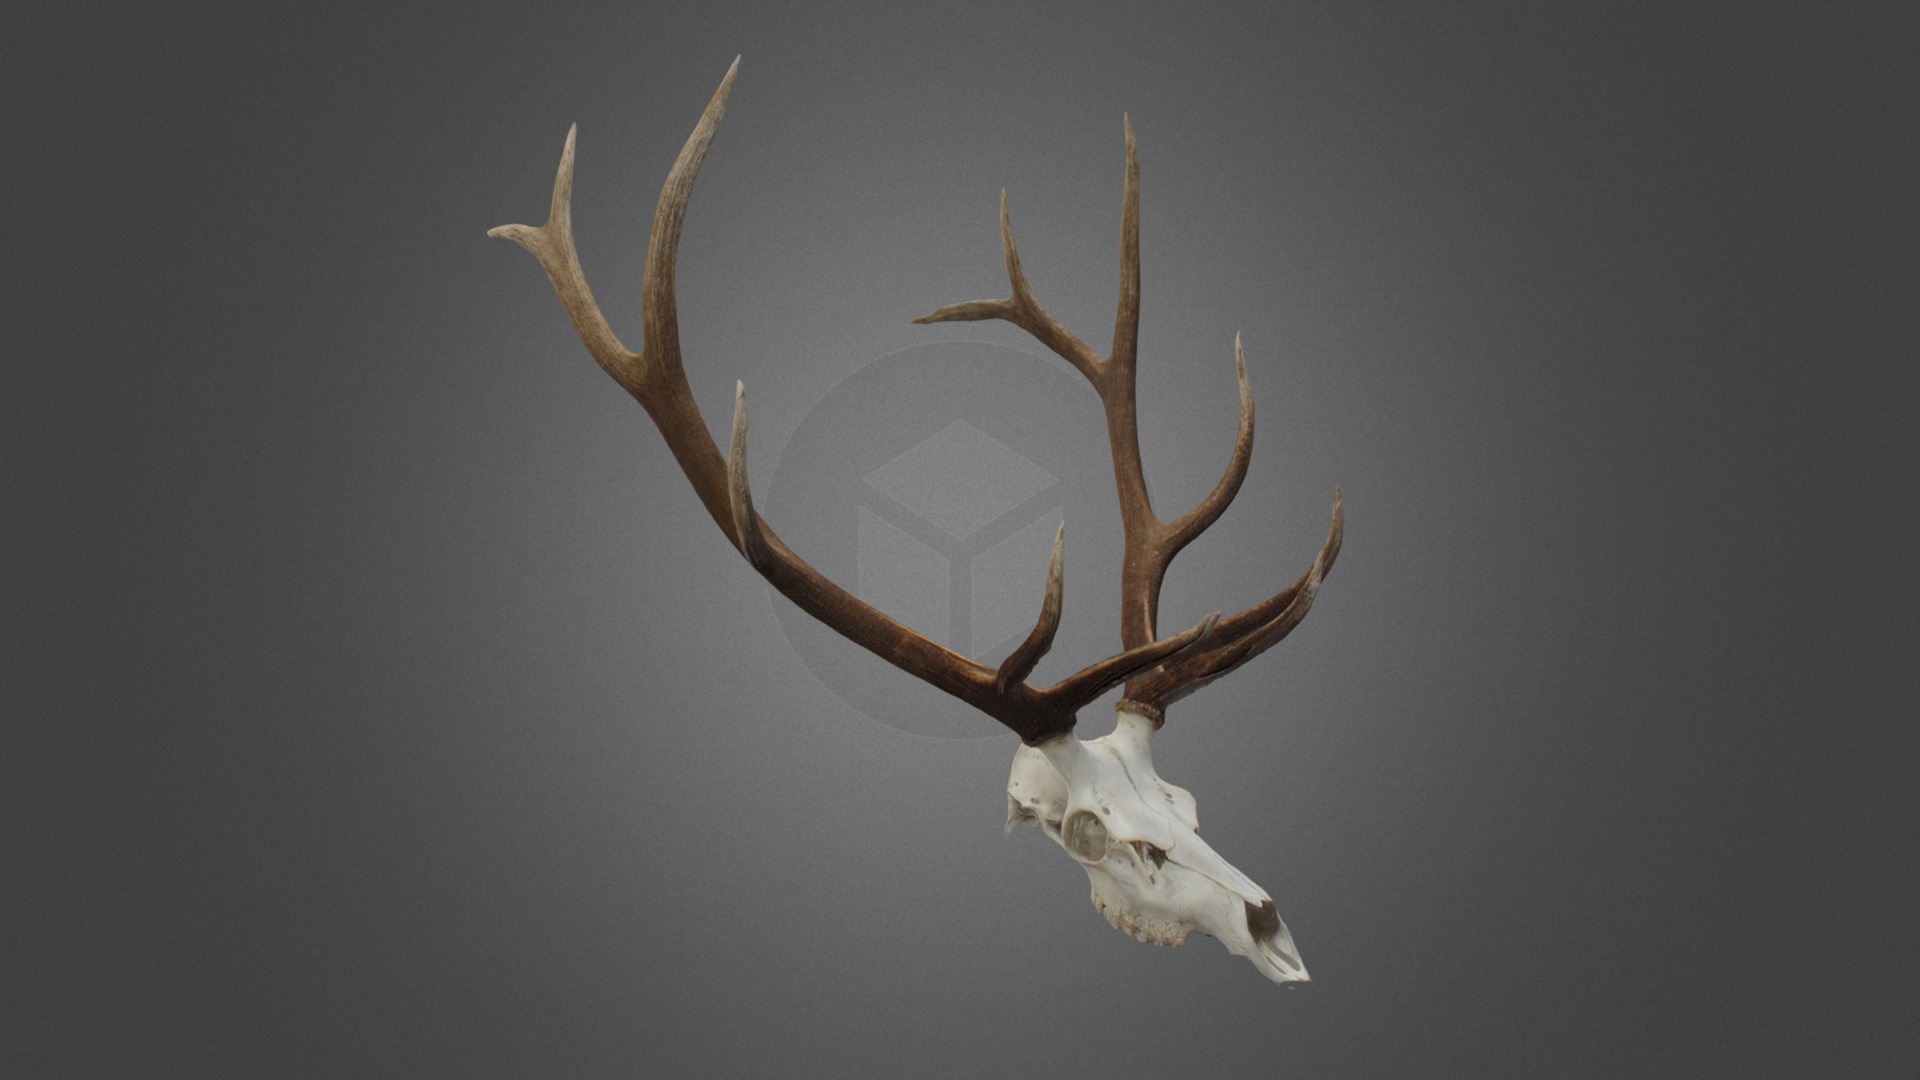 3D model John Bishop- Rocky Mountain Bull Elk - This is a 3D model of the John Bishop- Rocky Mountain Bull Elk. The 3D model is about a reindeer head with antlers.